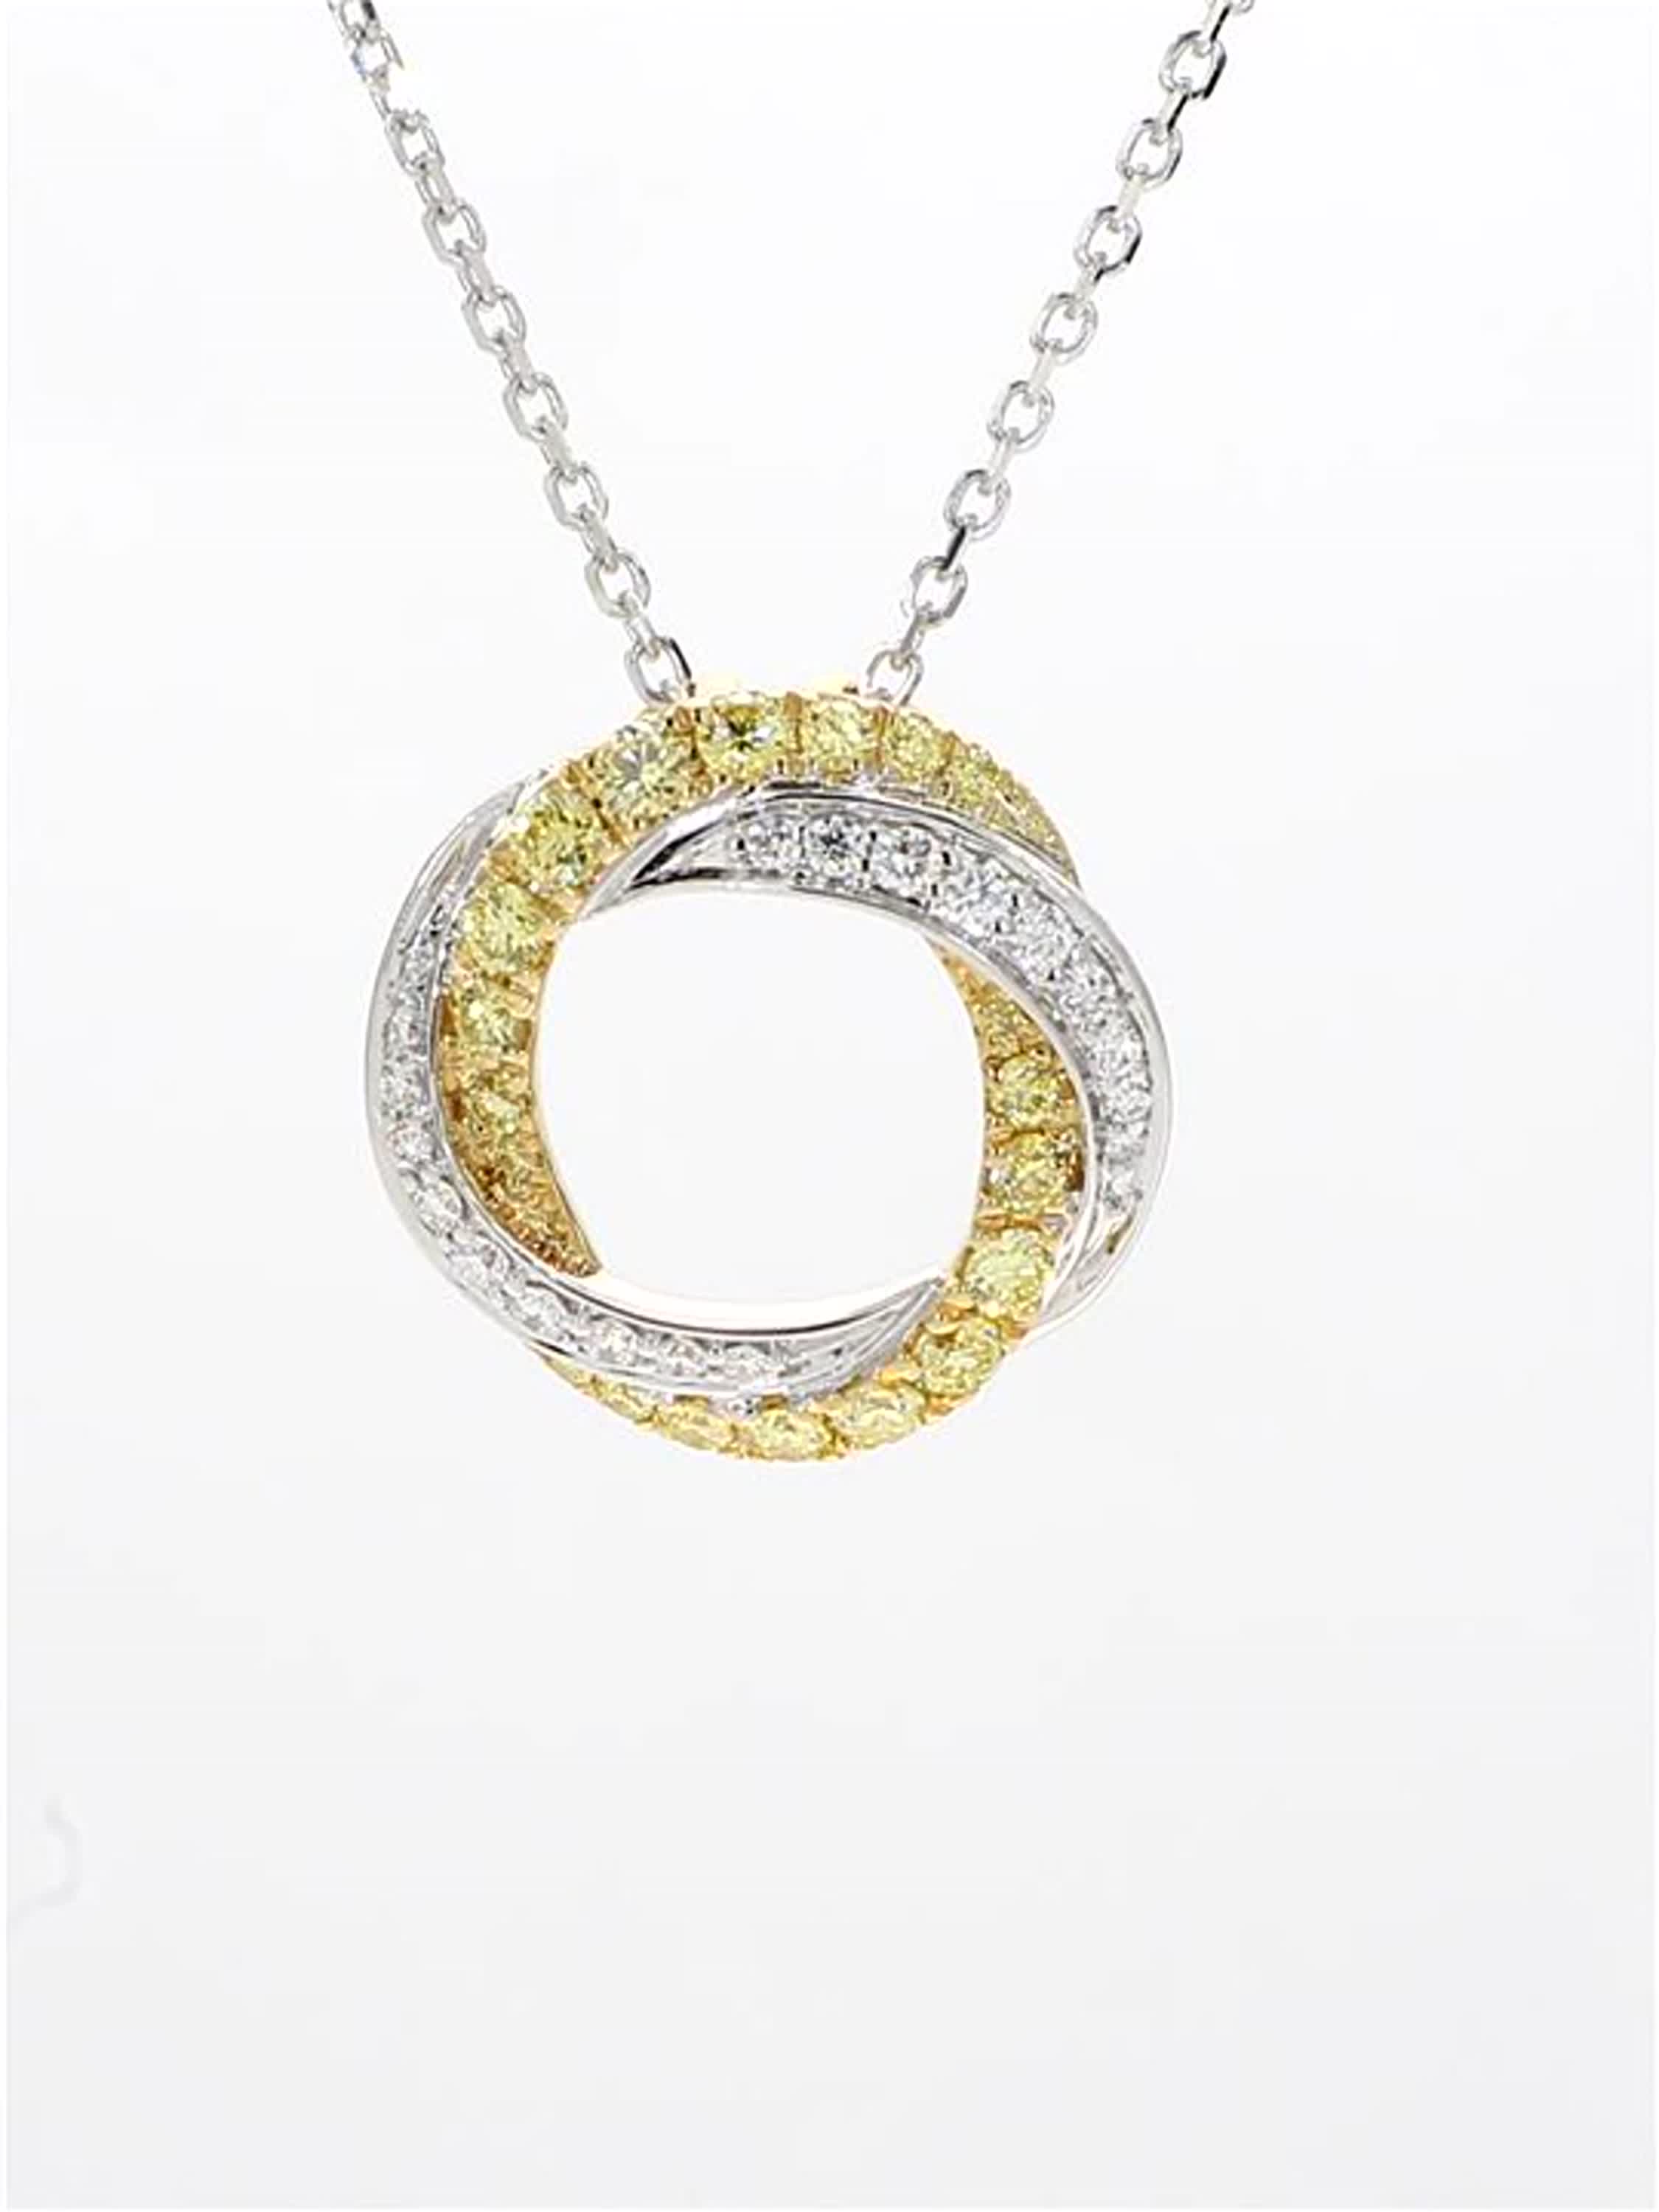 Natural Yellow Round and White Diamond .63 Carat TW Gold Circle Pendant